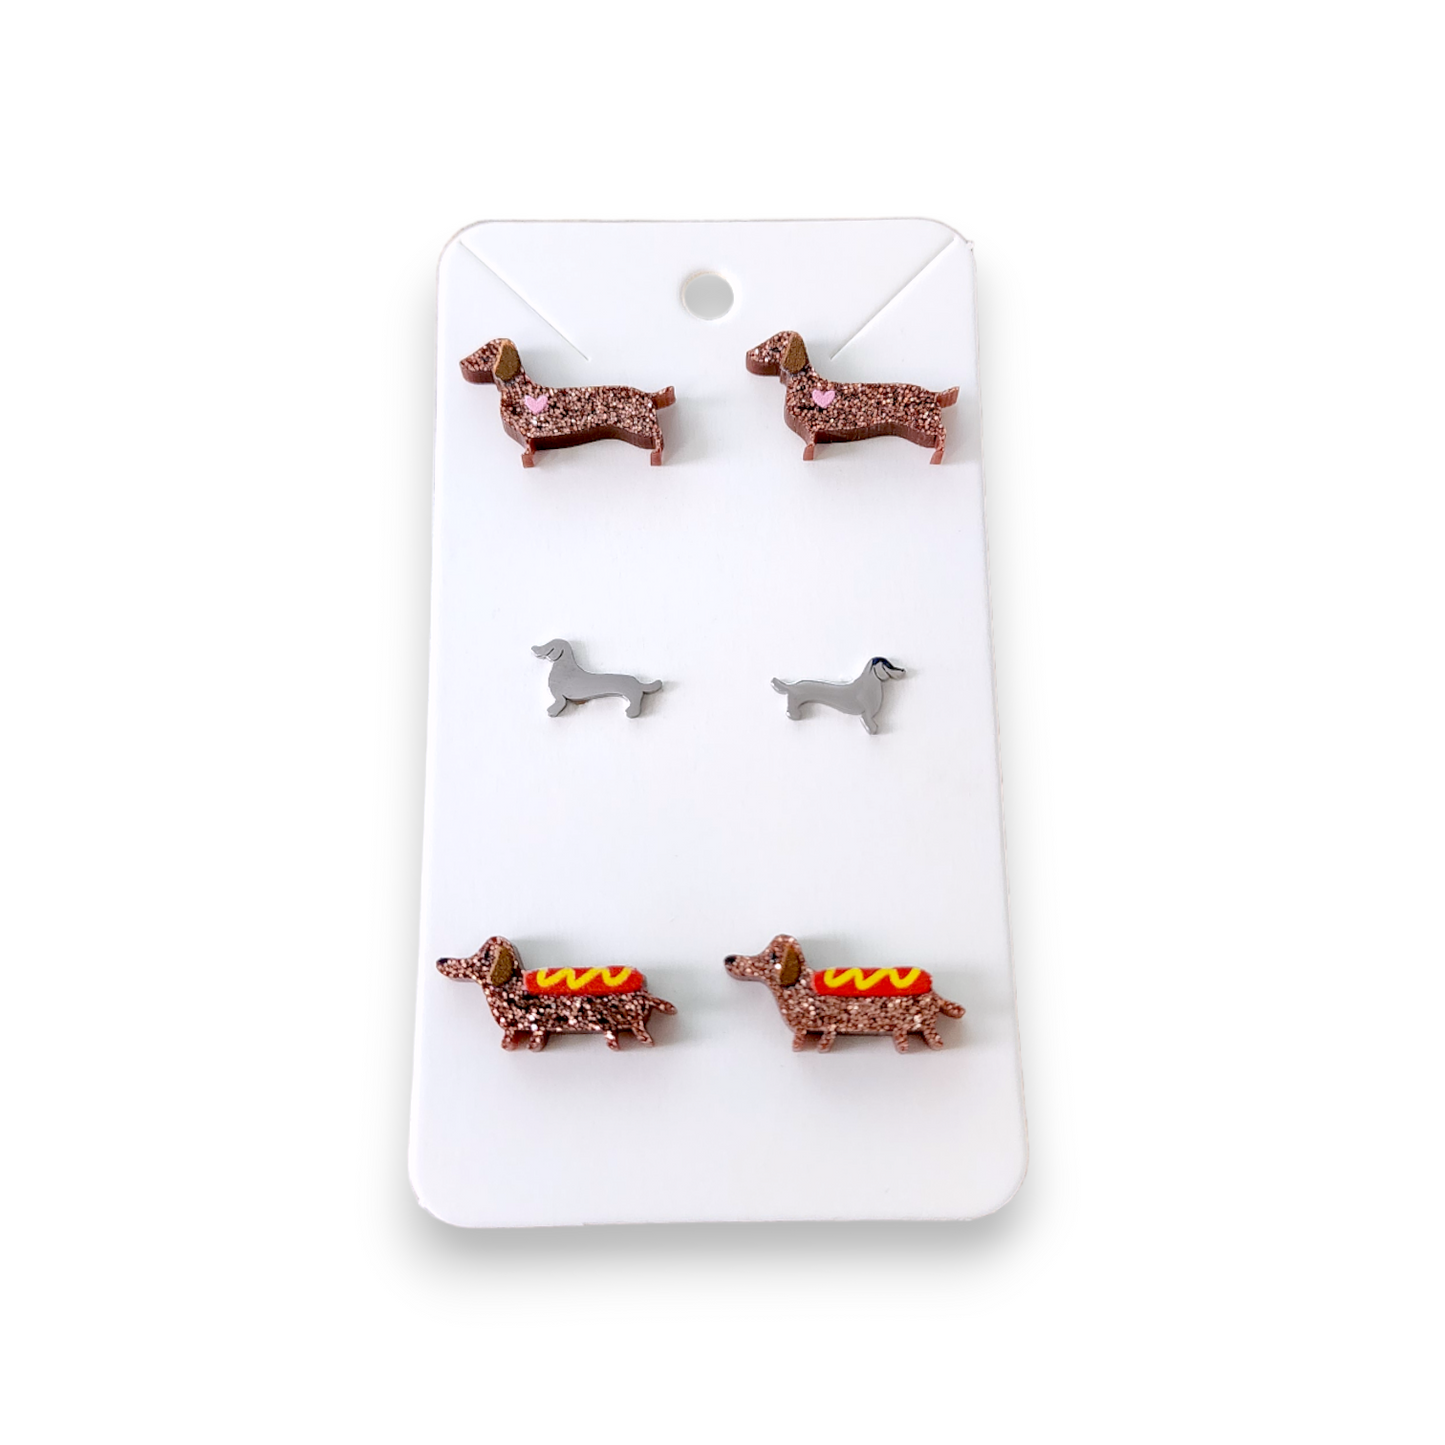 Dachshund Earrings - Set of 3